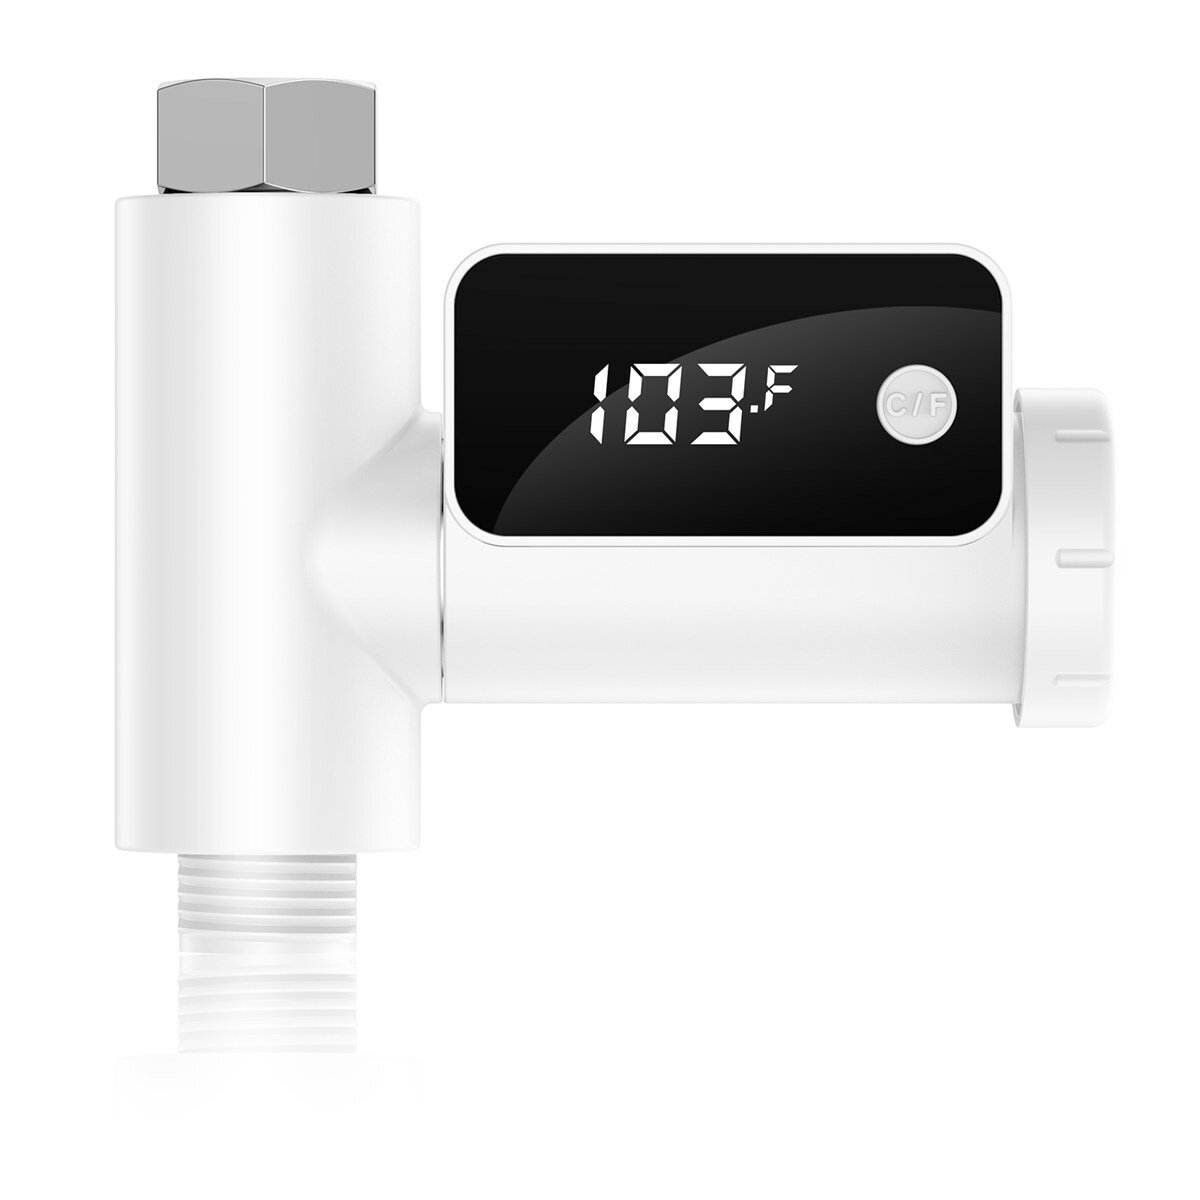 LED Display Thuis Water Douche Thermometer Stroom Zelfgenererende Elektriciteit Kraan Water Temperat